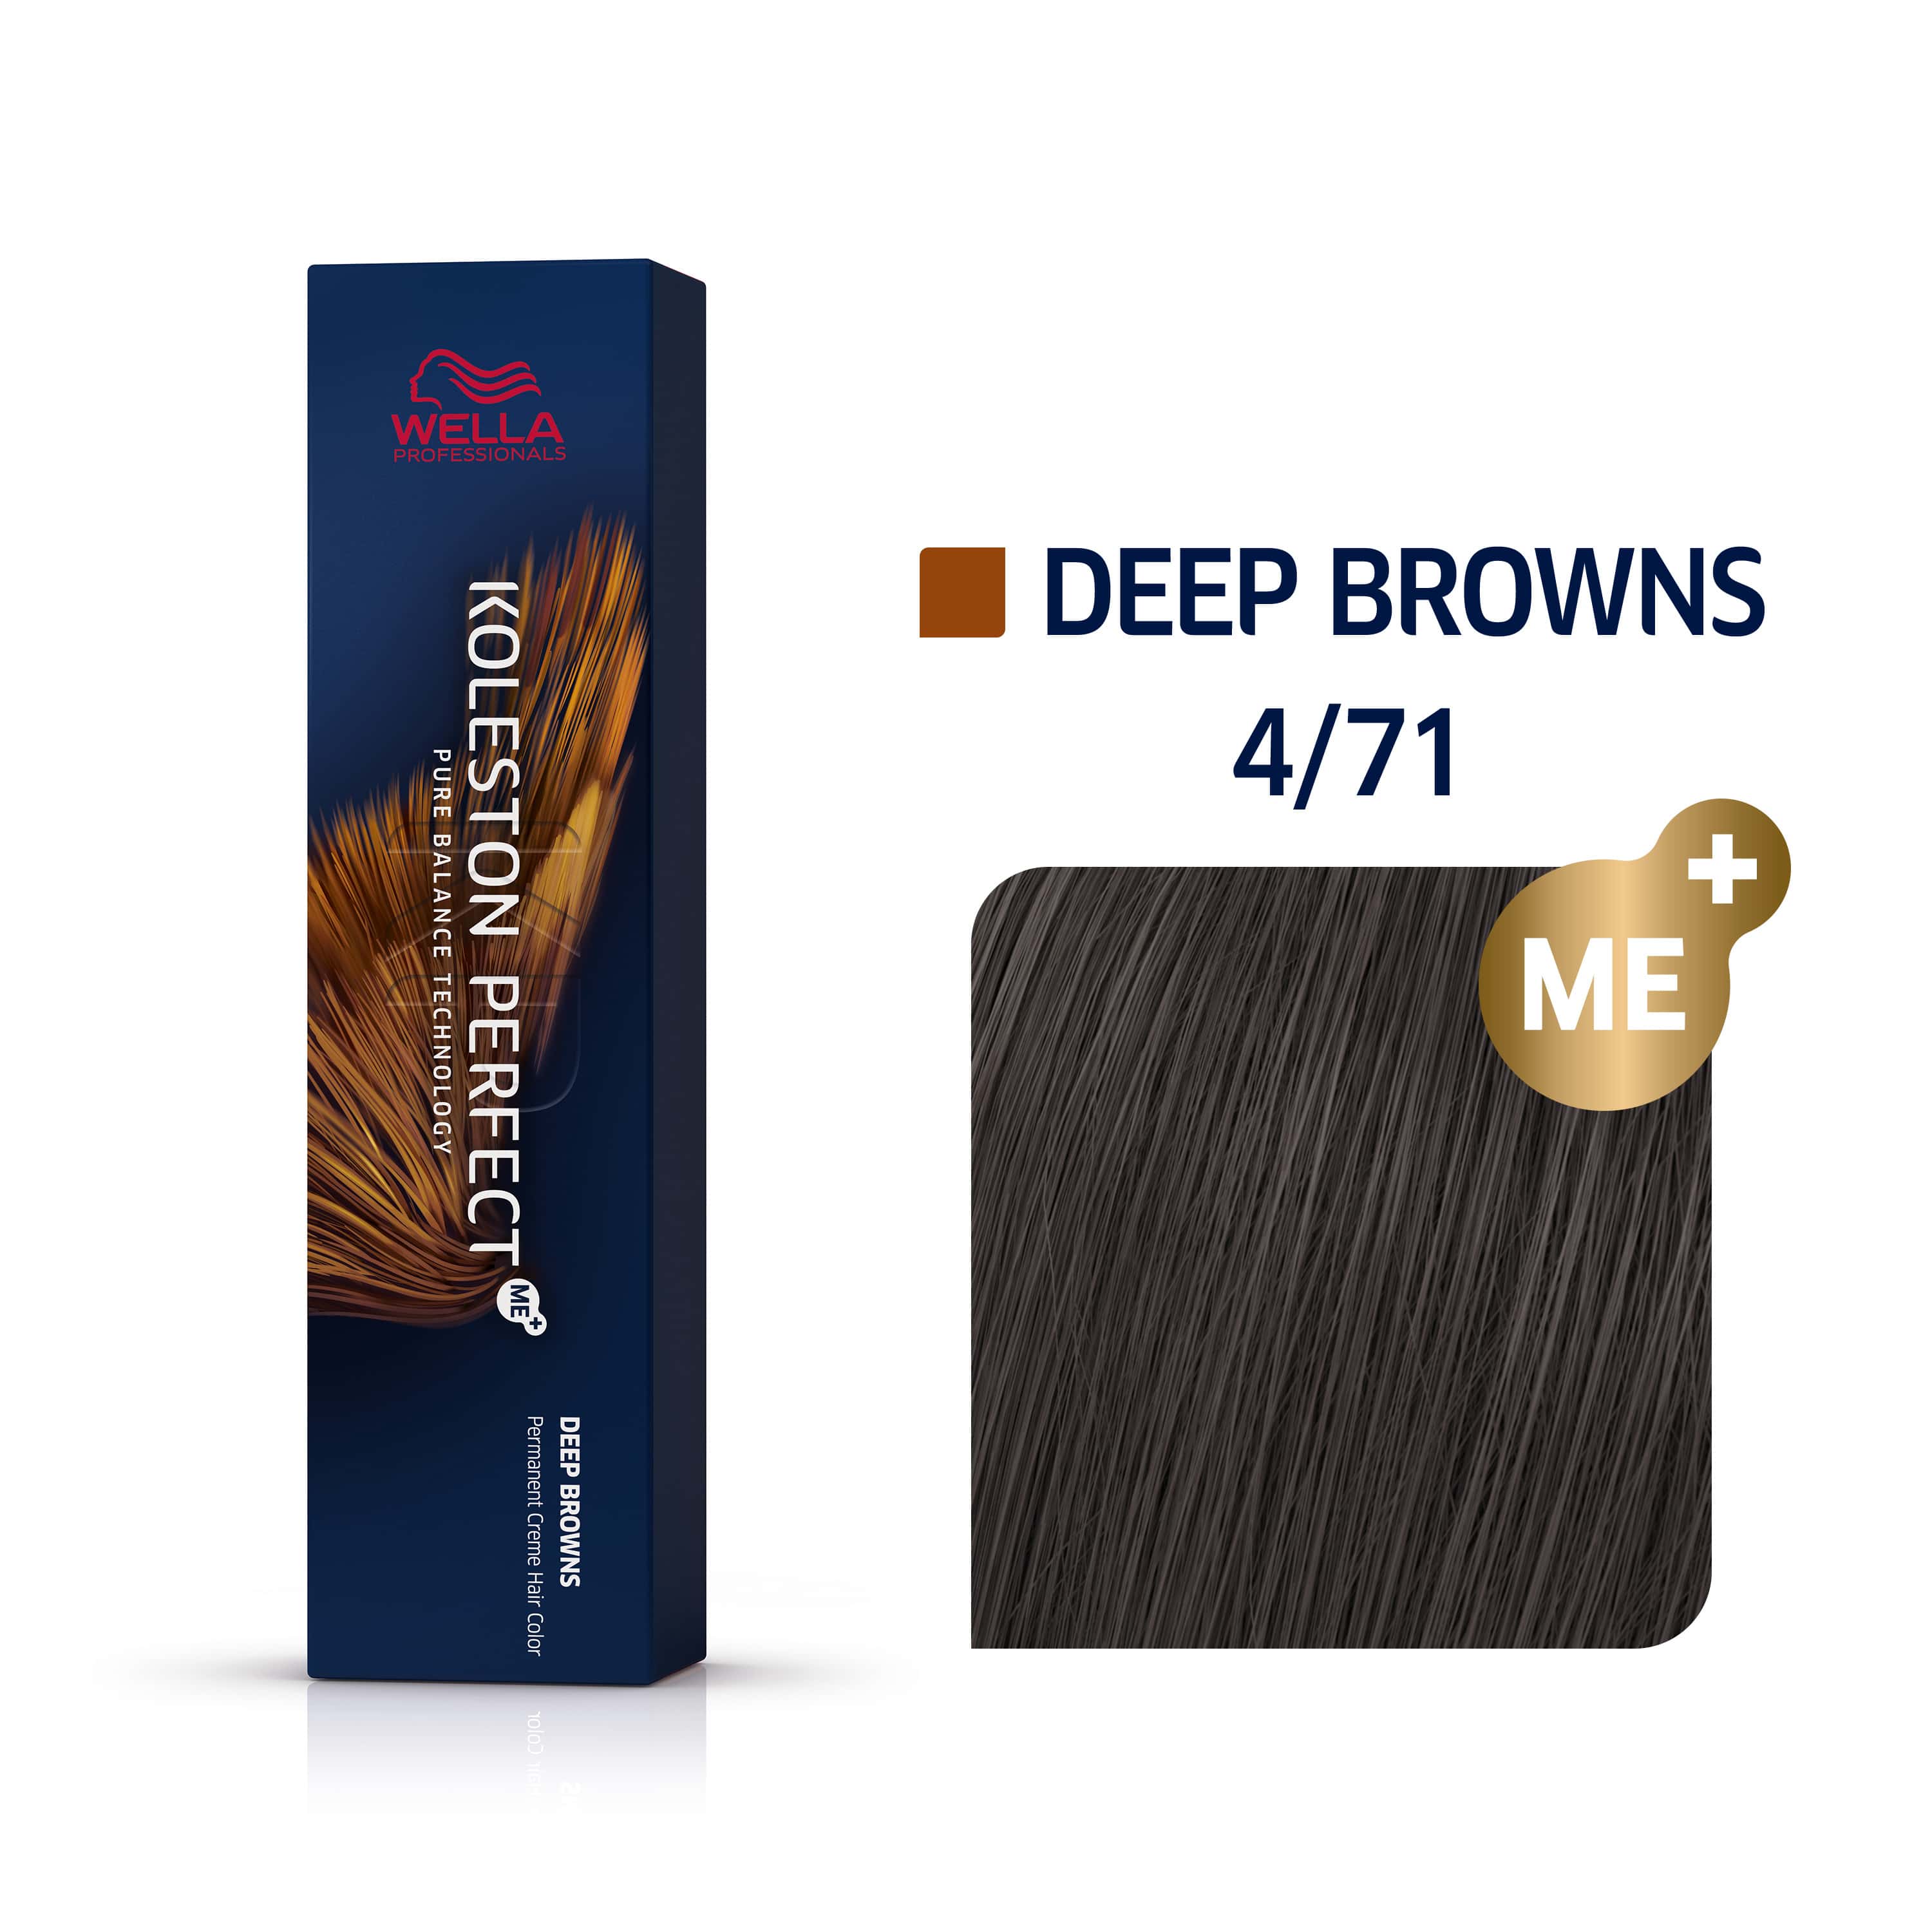 wella deep brown hair dye 4/71